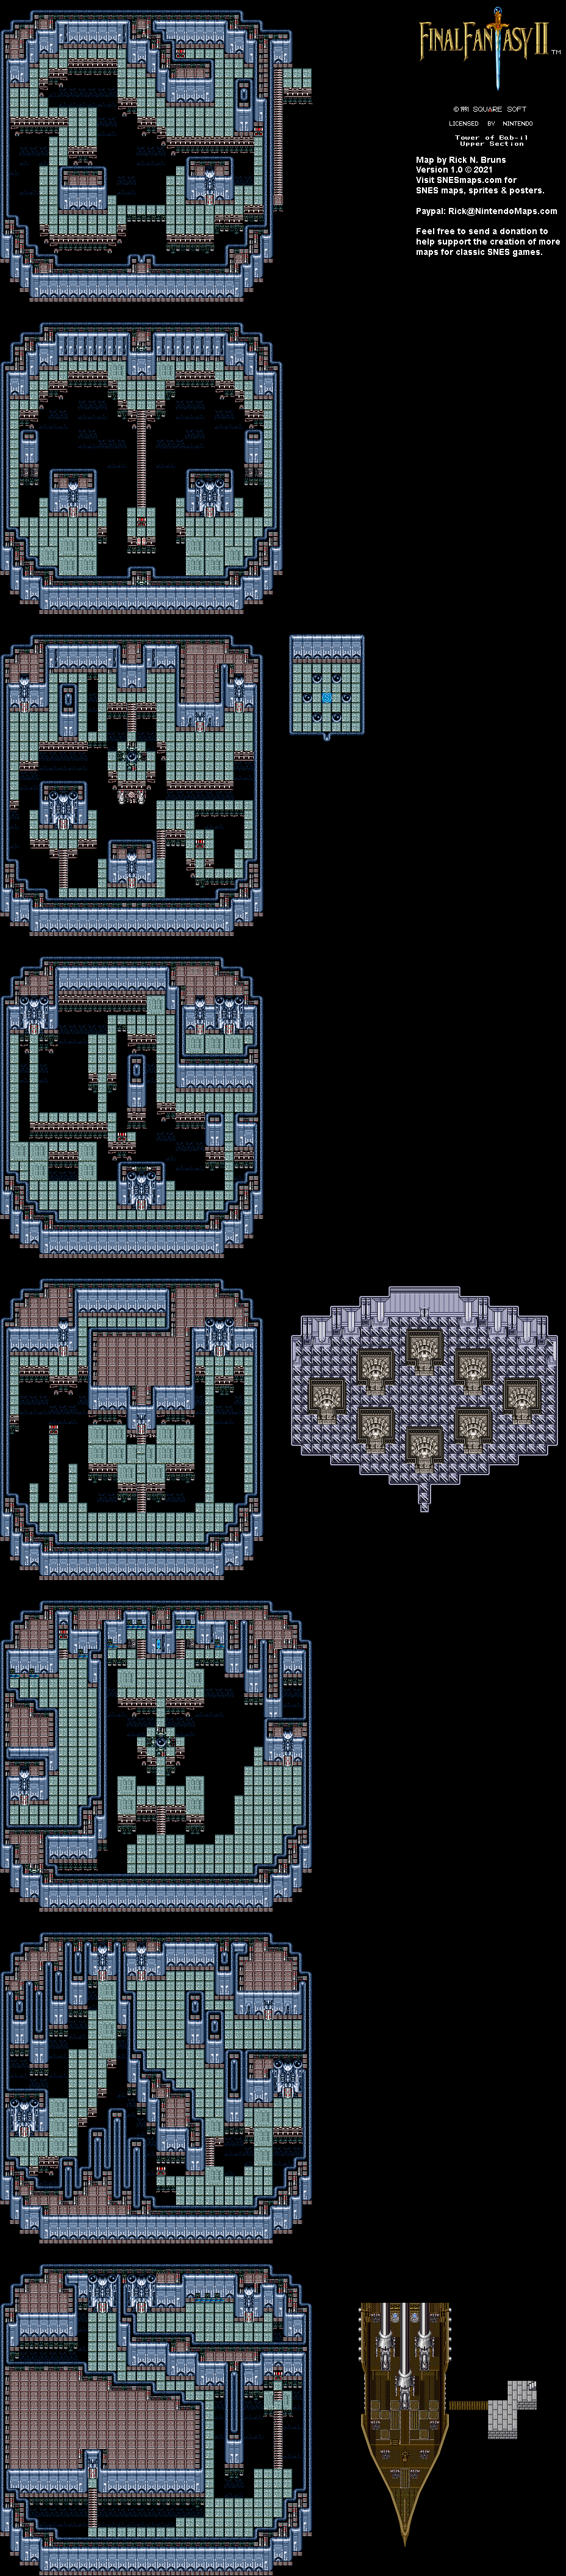 Final Fantasy II 2 (IV 4) - Tower of Bab-il Upper Section Super Nintendo SNES Map BG